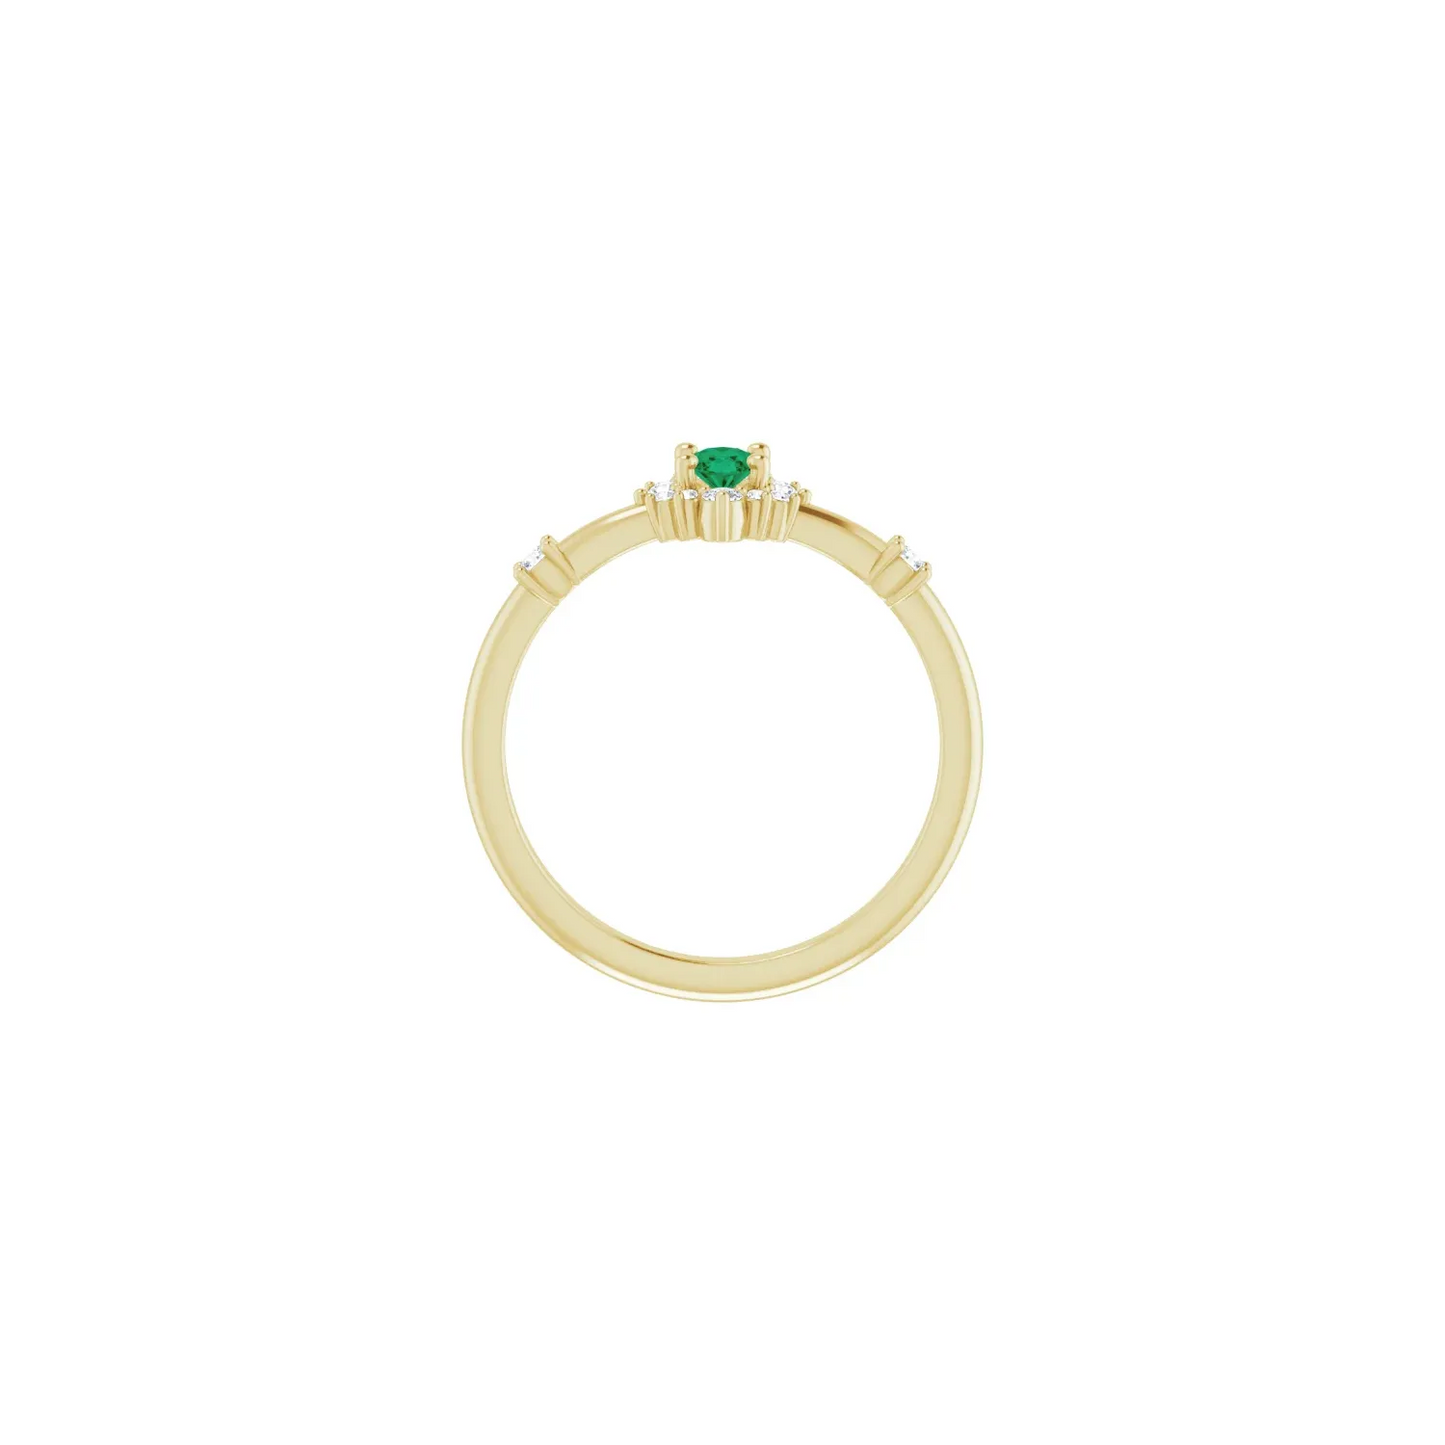 14K Yellow Natural Emerald & 1/6 CTW Natural Diamond Halo-Style Ring